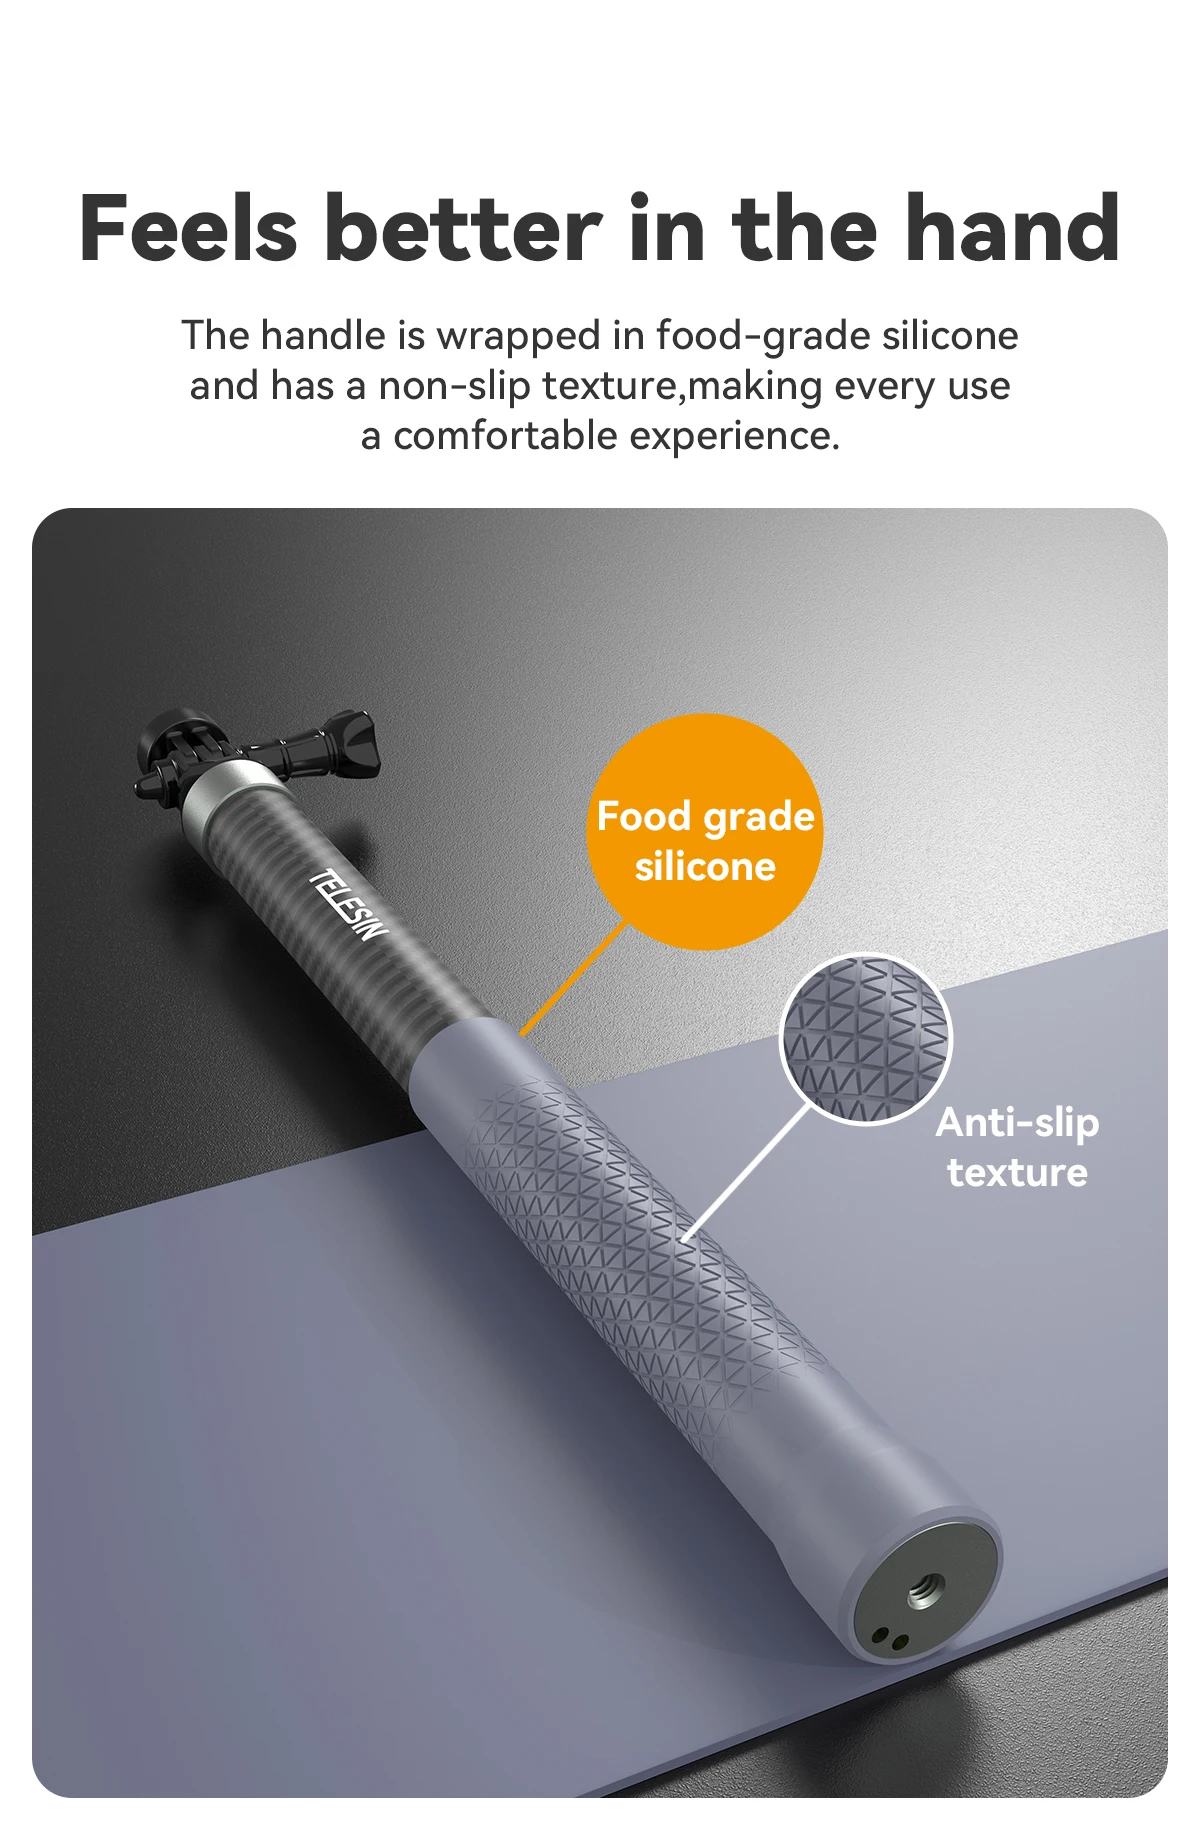 Telesin 1.2M carbon Fiber Selfie Stick Eccentric Tube Design Suitable for GoPro/Insta360 Action cameras